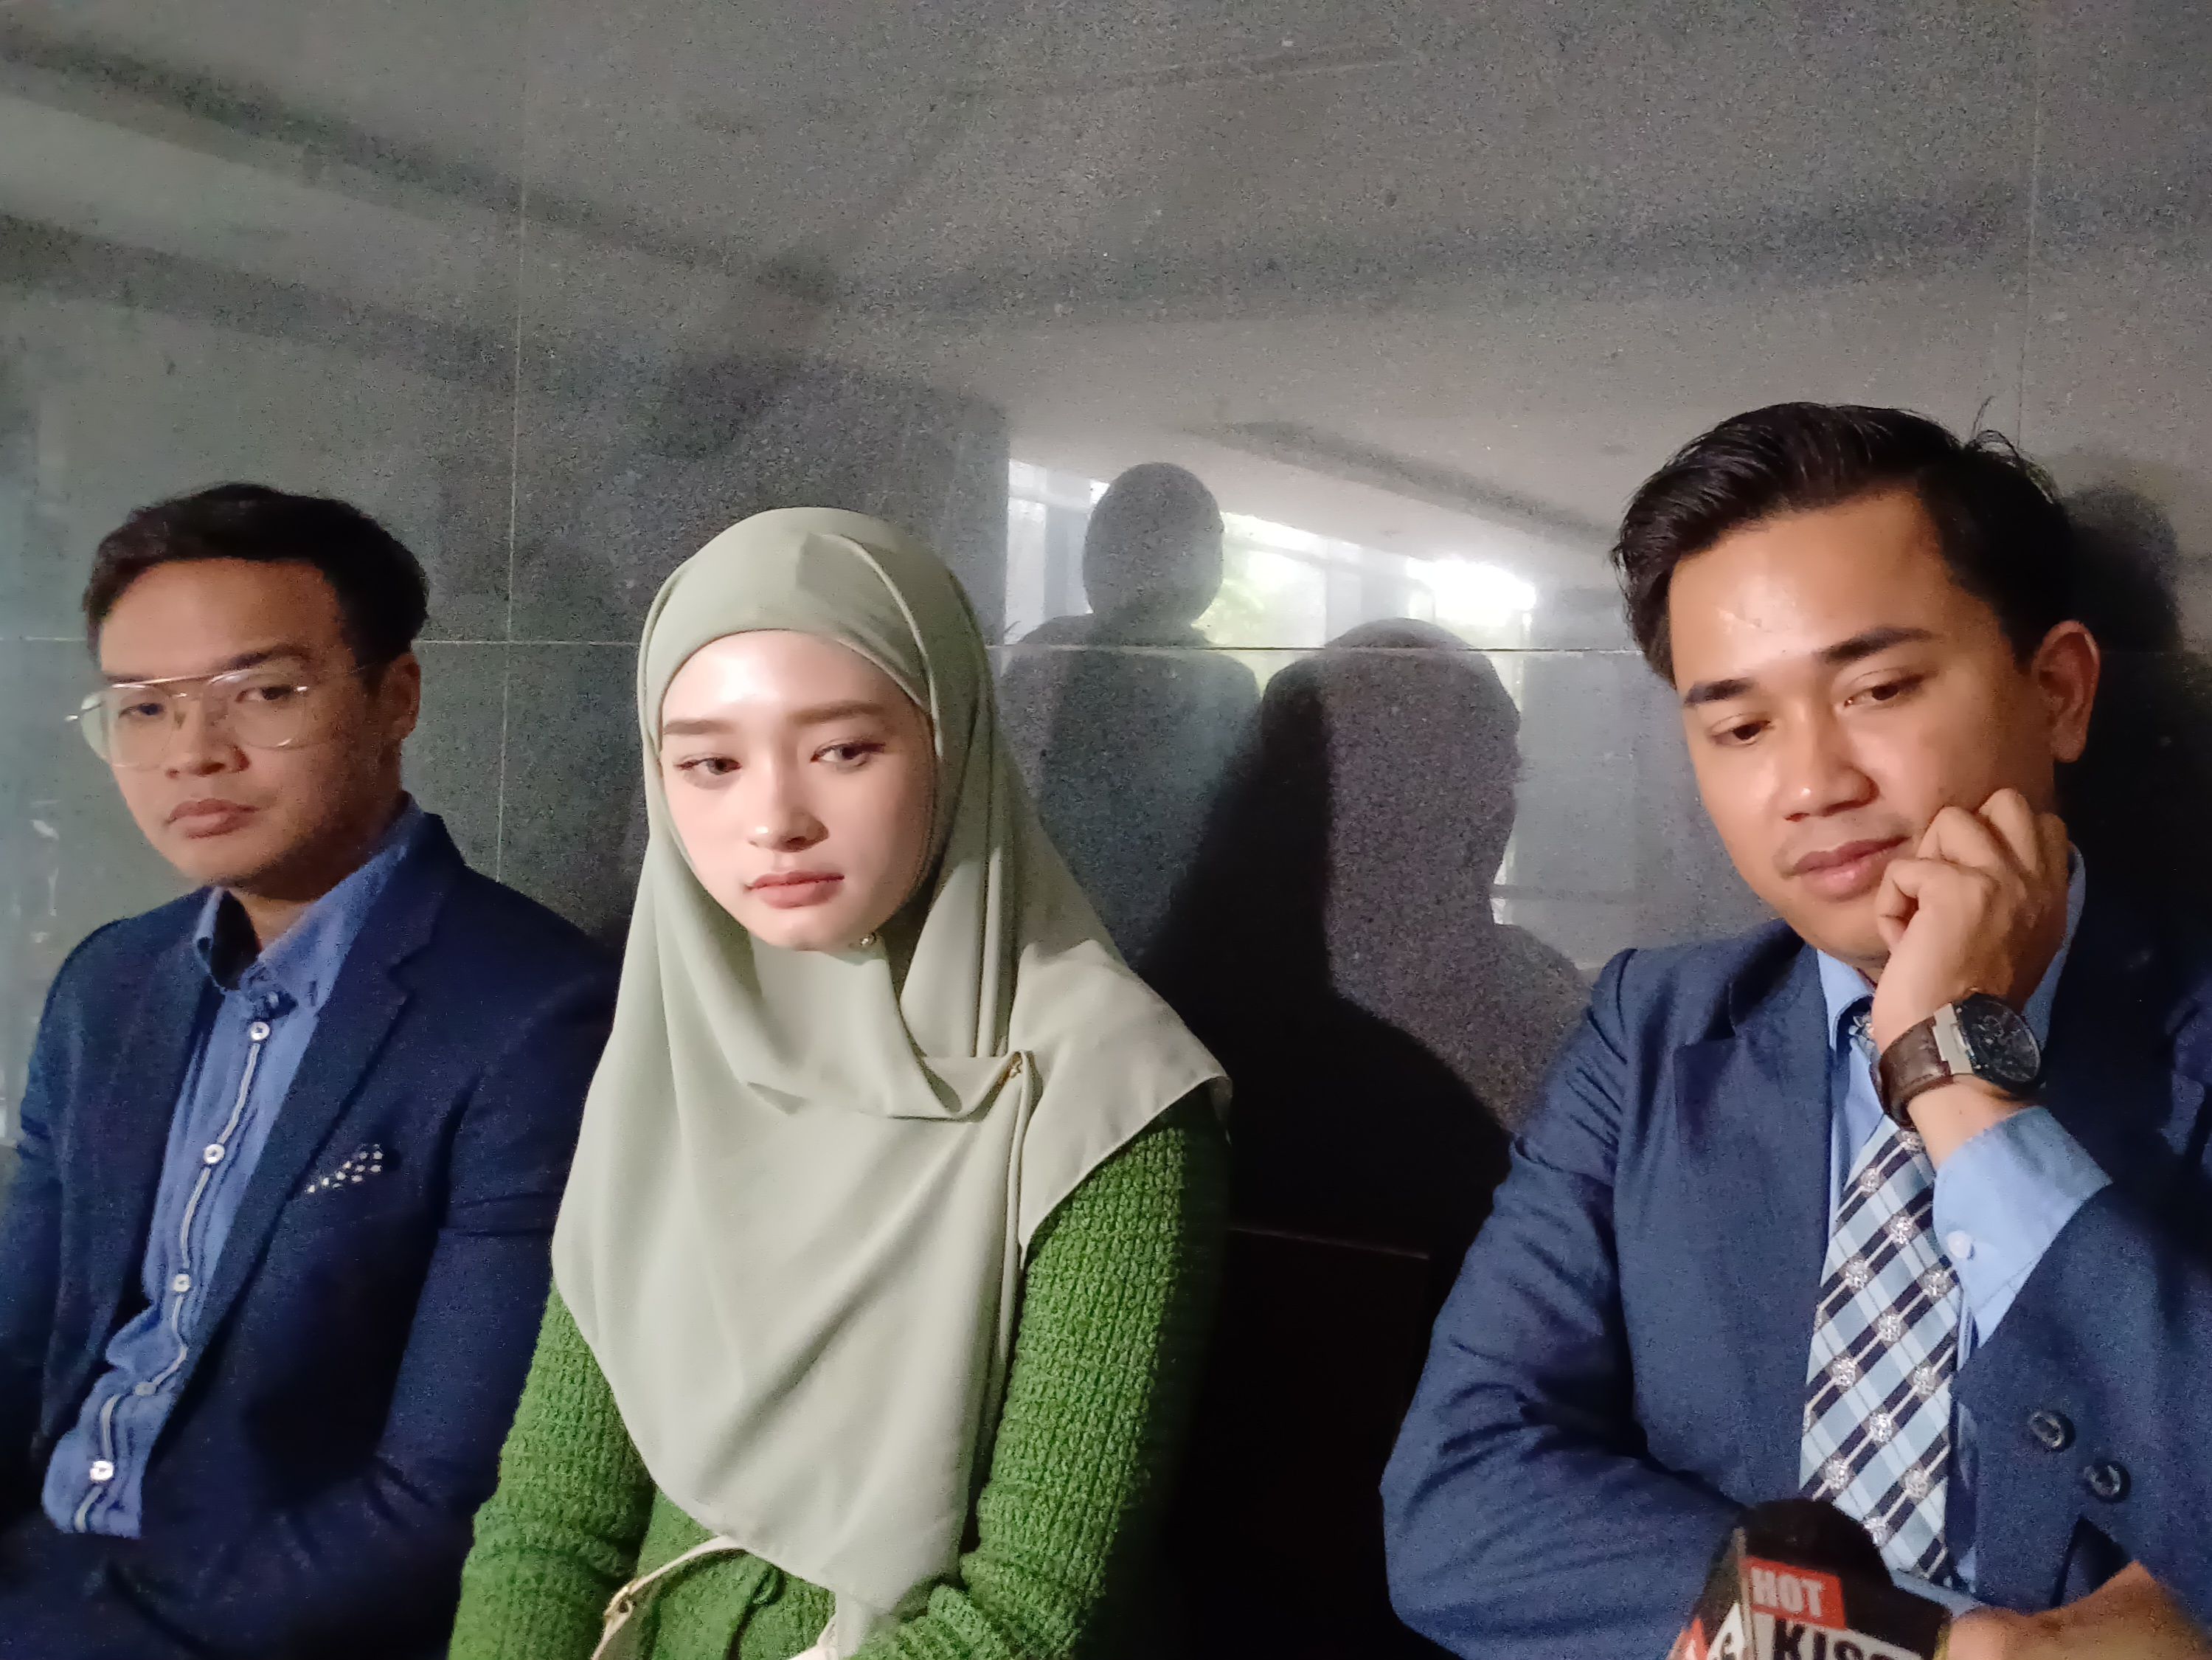 Inara Rusli Telah Serahkan Proposal Mediasi ke PN Jakarta Selatan atas Kasus Royalti Virgoun